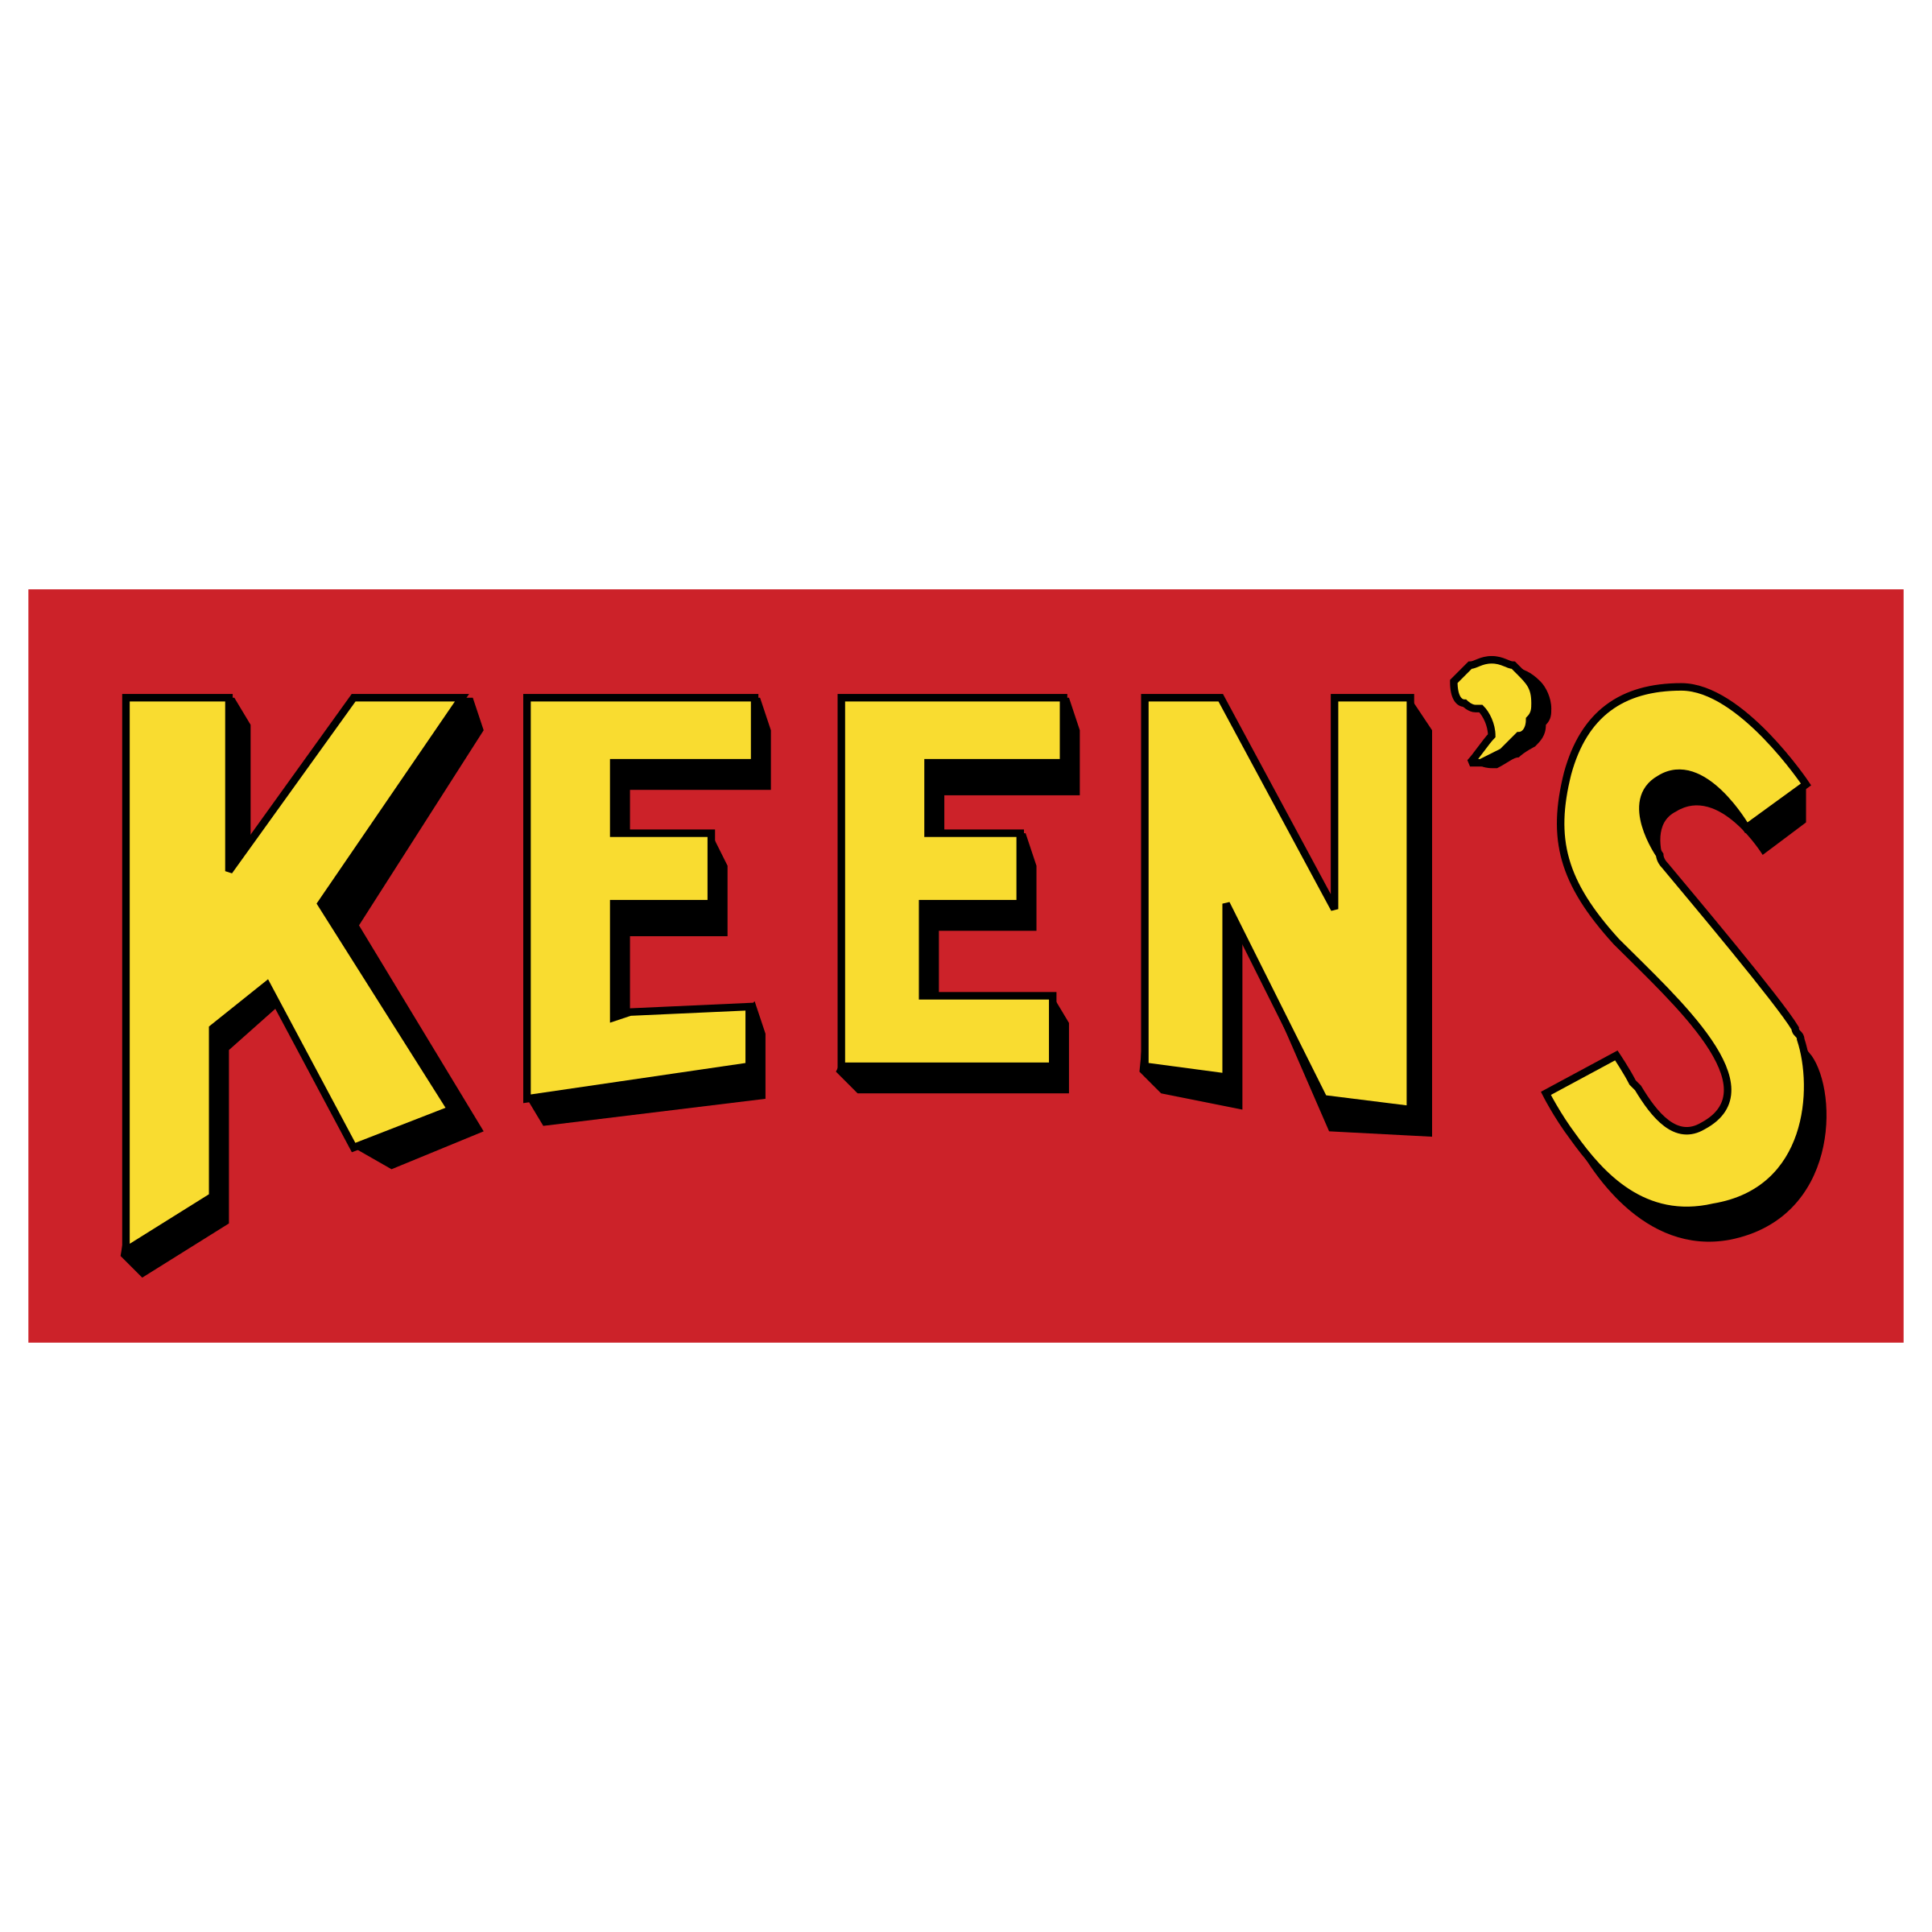 Keen.com Logo - Keen's Logo PNG Transparent & SVG Vector